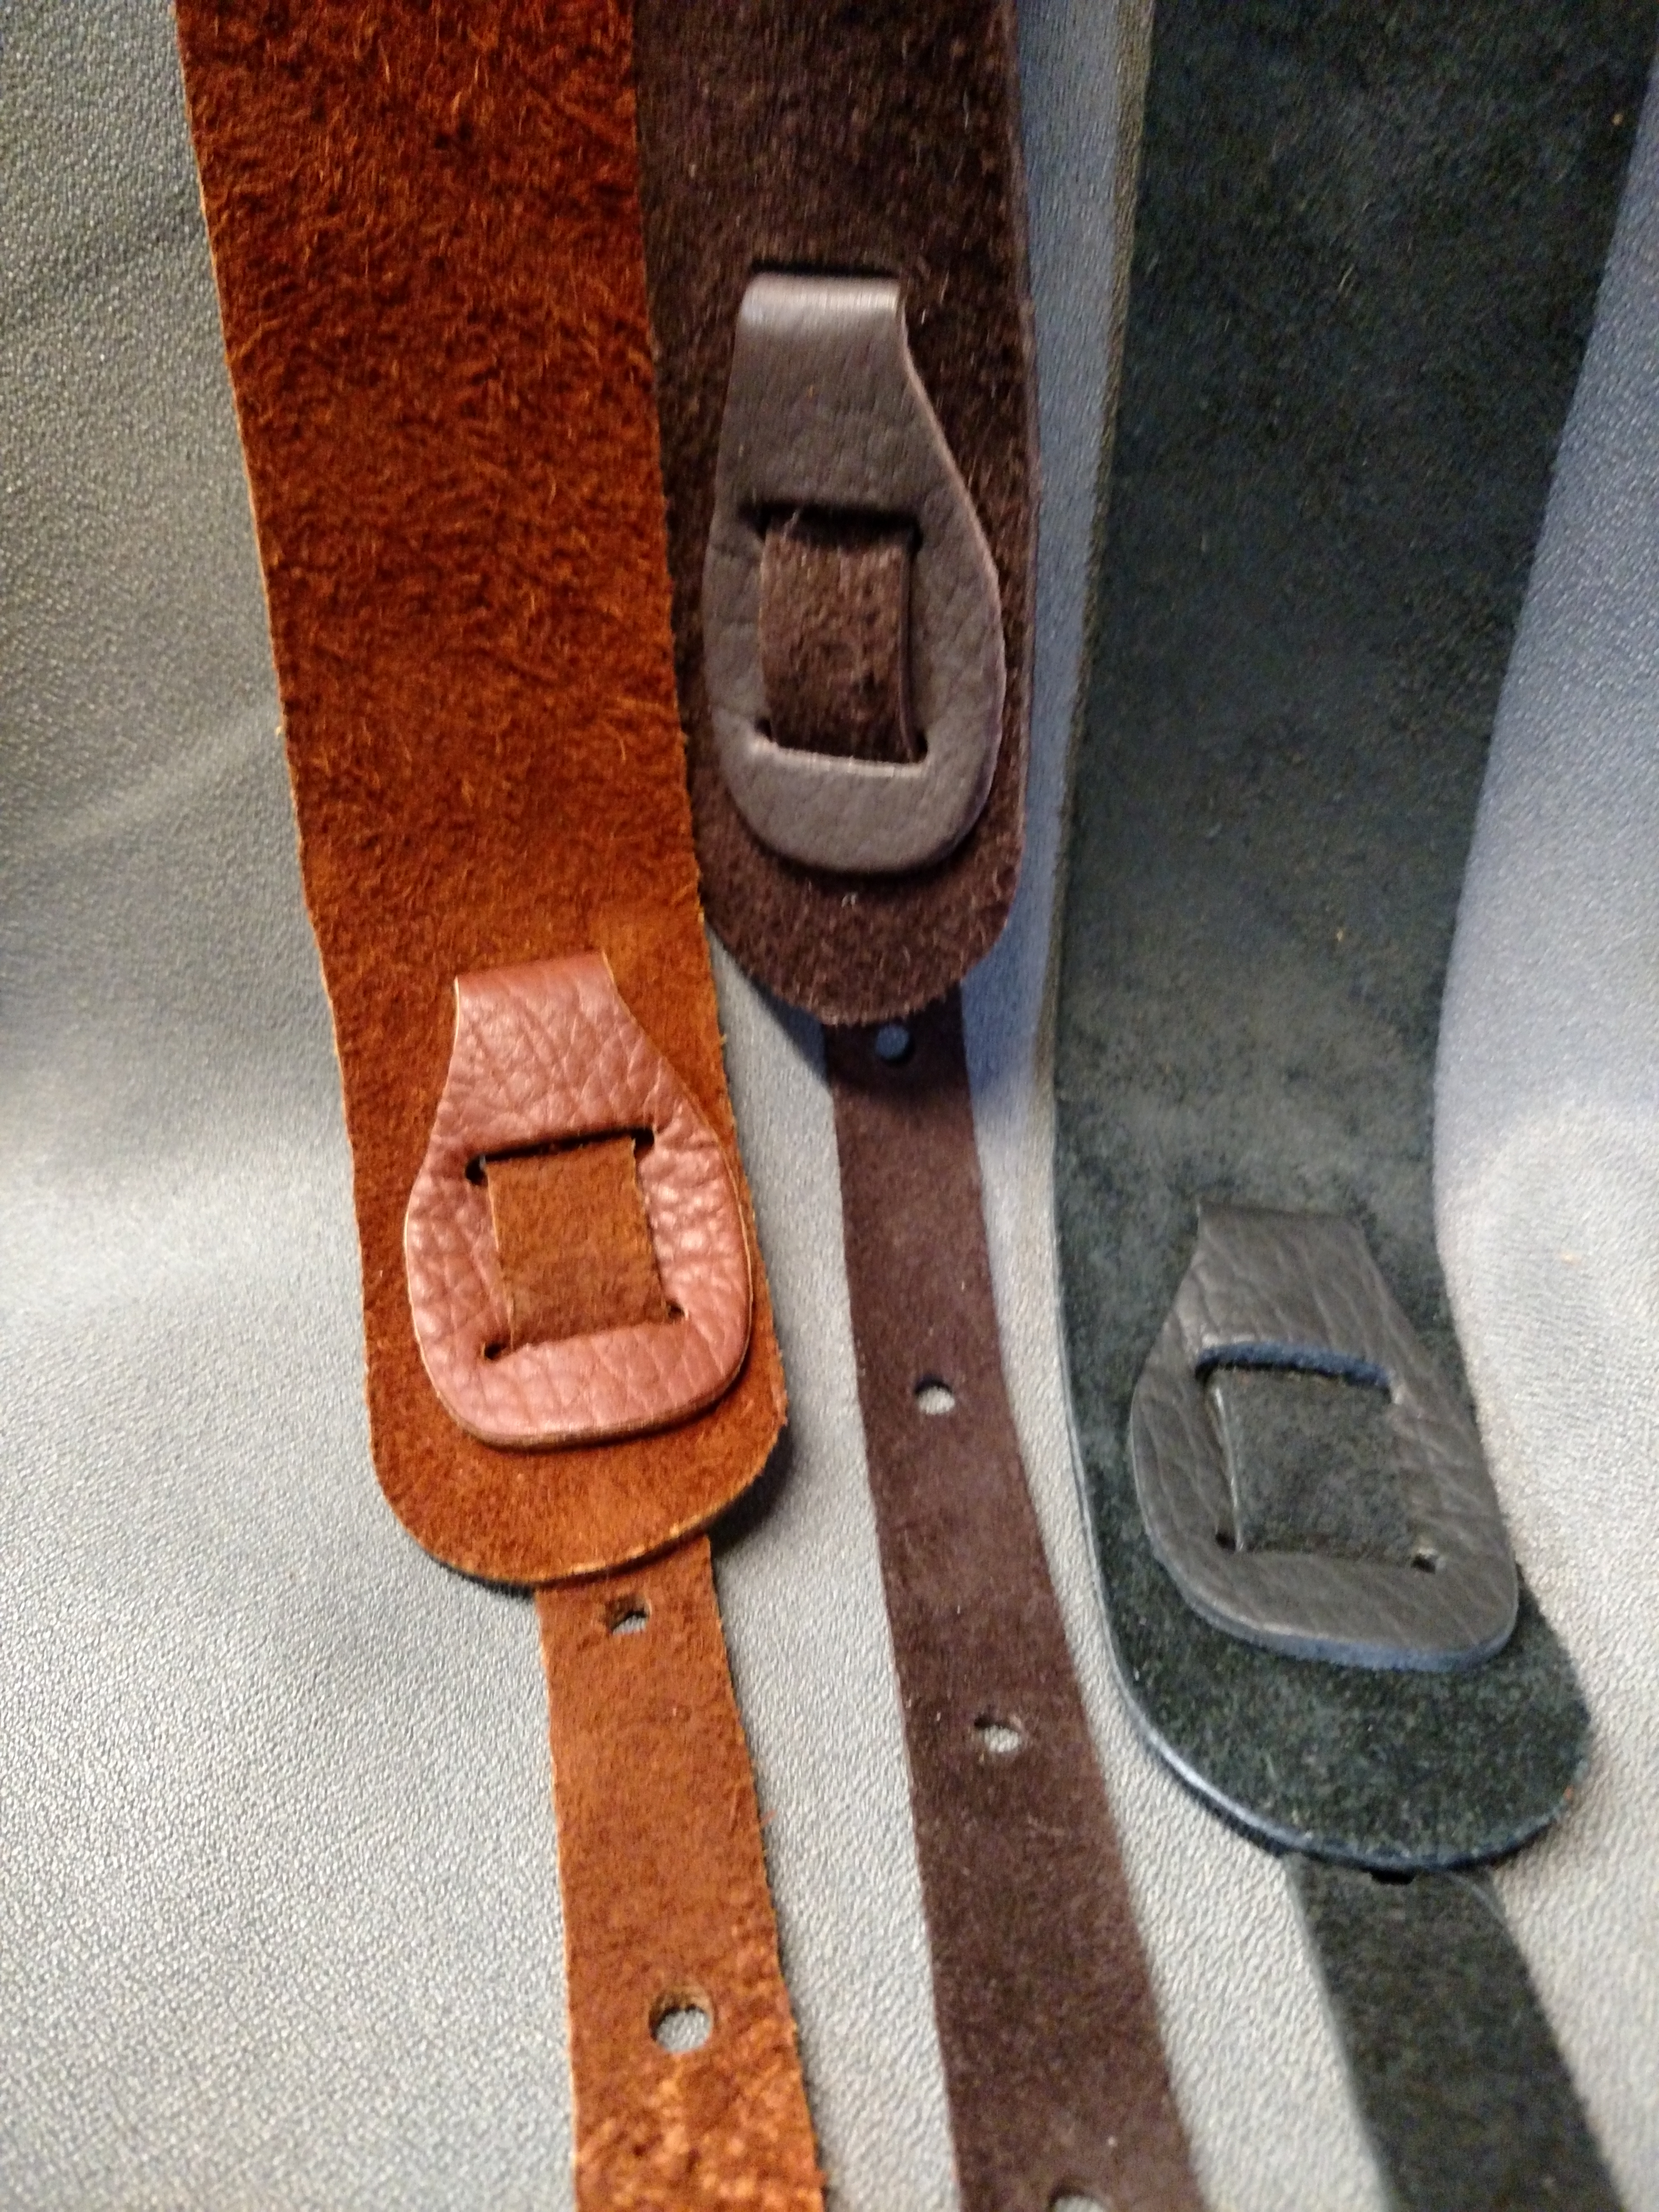 Leather Banjo Straps, Adjustable, Lakota Strap, Comfortable